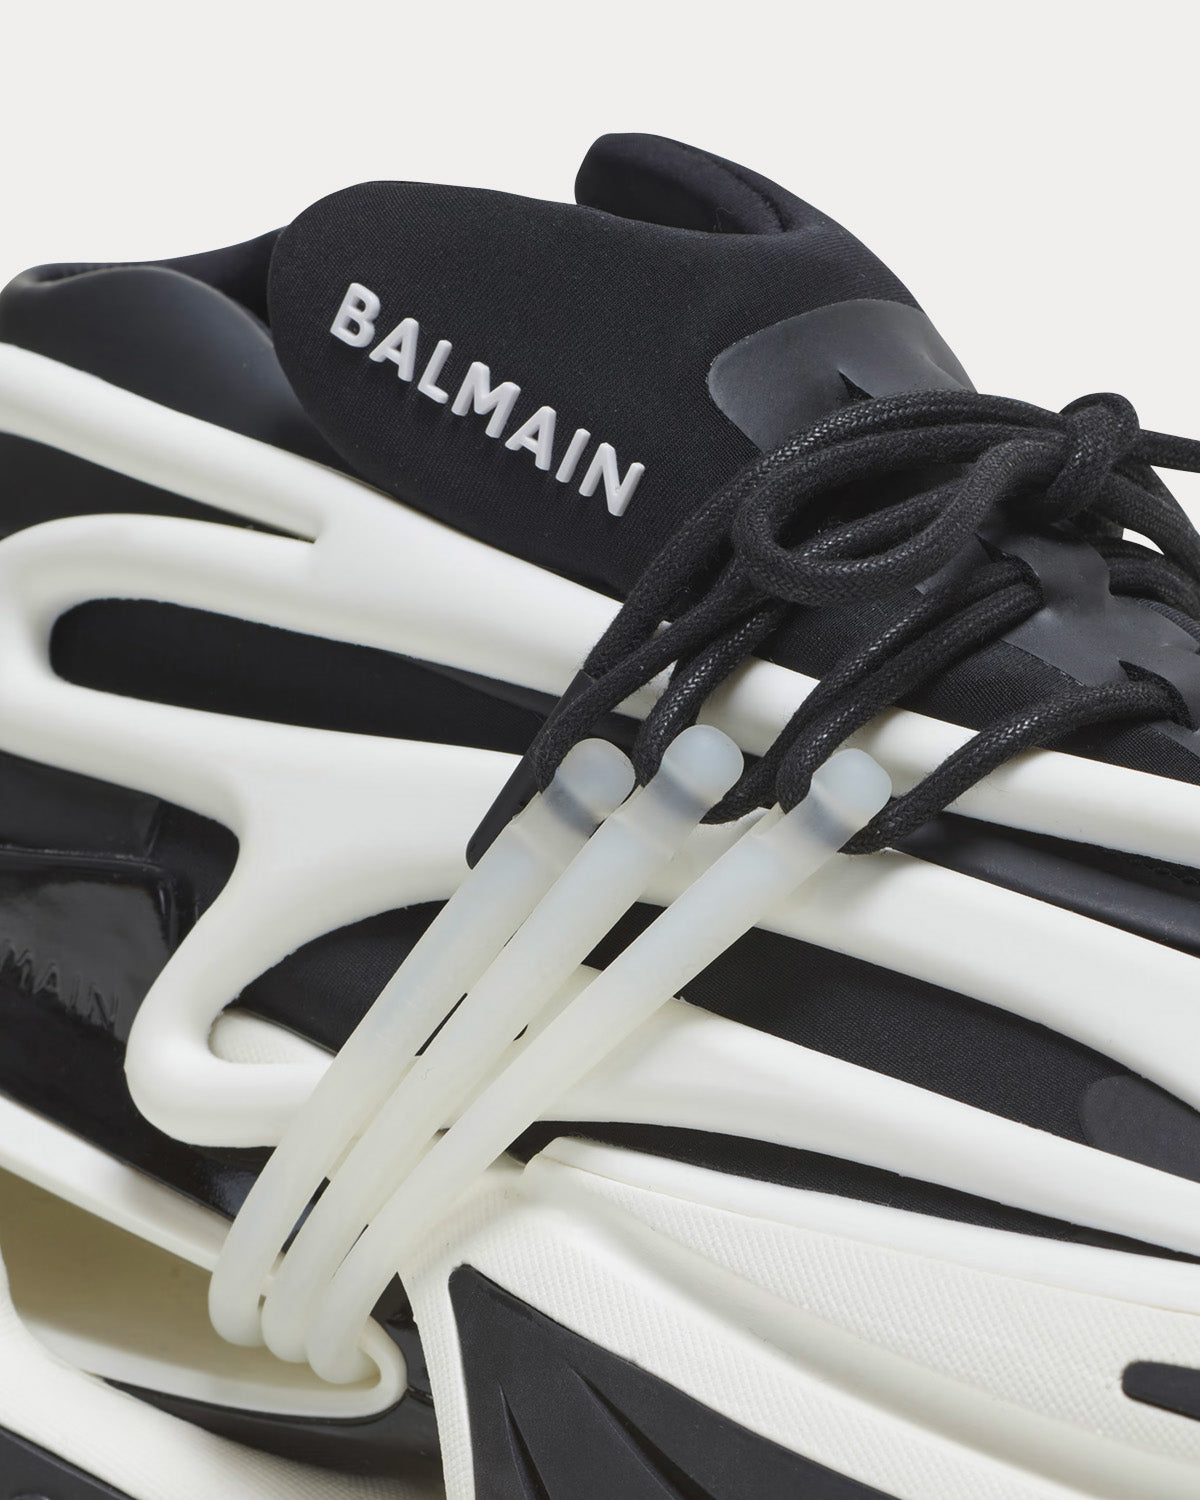 Balmain - Unicorn Two-Tone Neoprene & Leather Black / White Low Top Sneakers